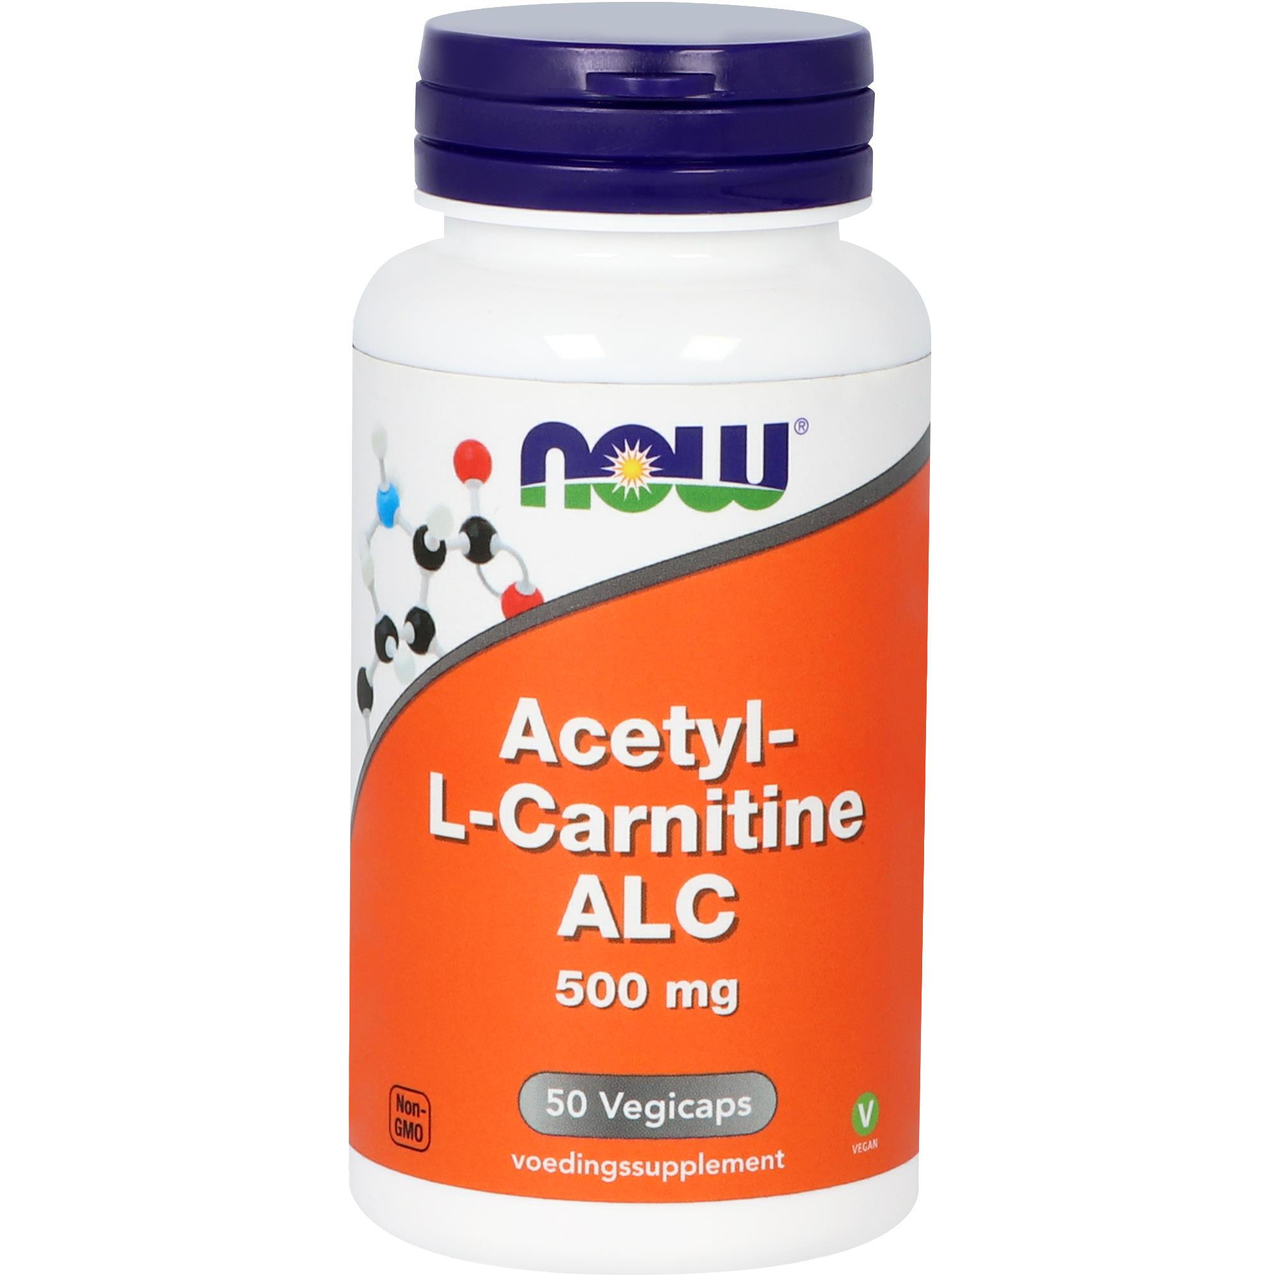 Acetyl-L-Carnitine 500 mg - 50 egicaps - Vitortho / NOW